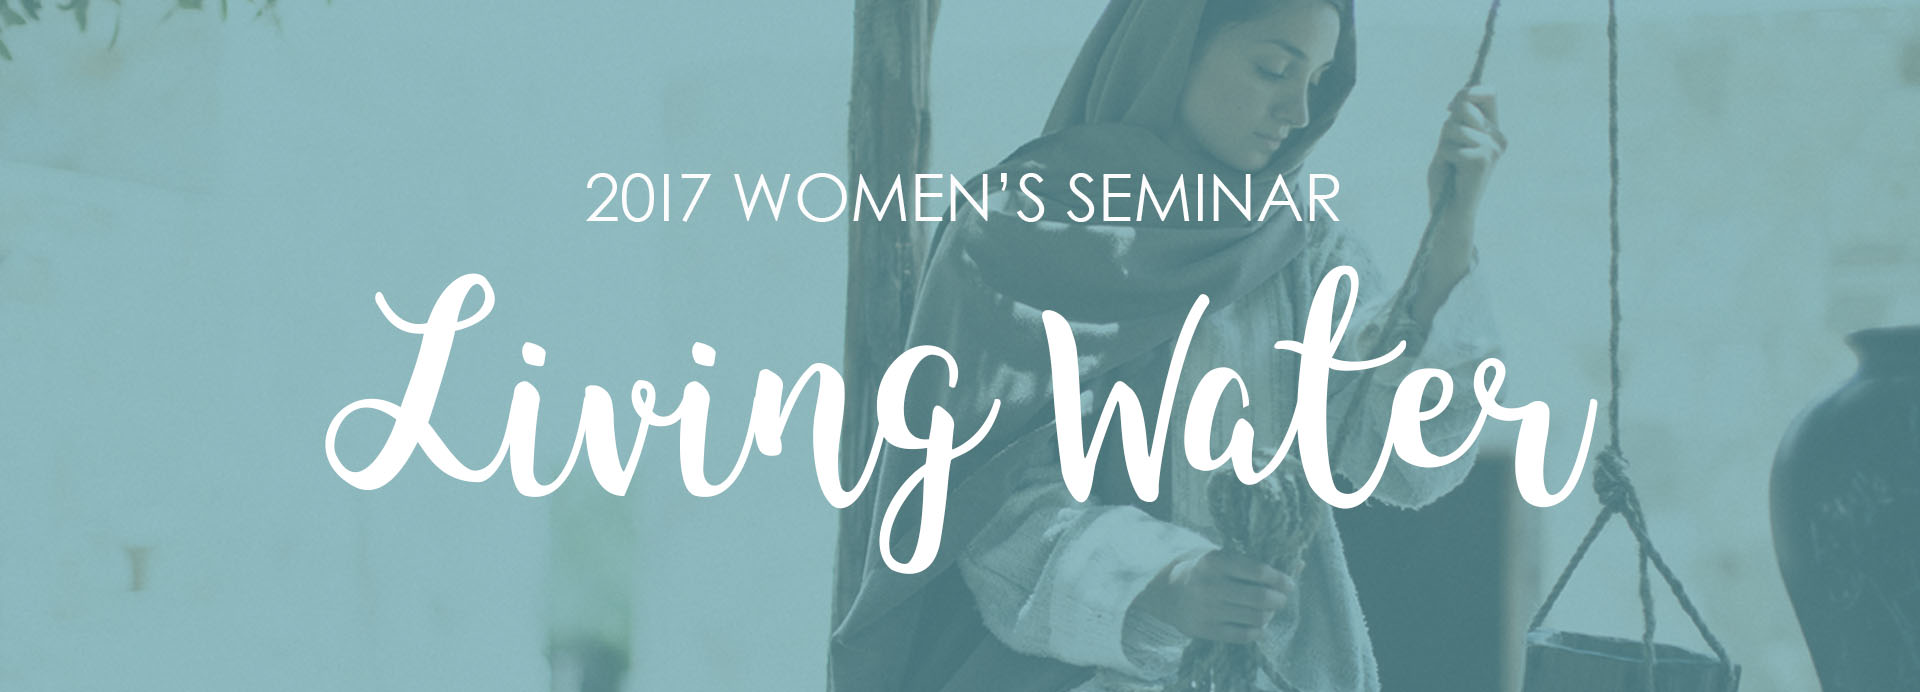 Women's Seminar 2017